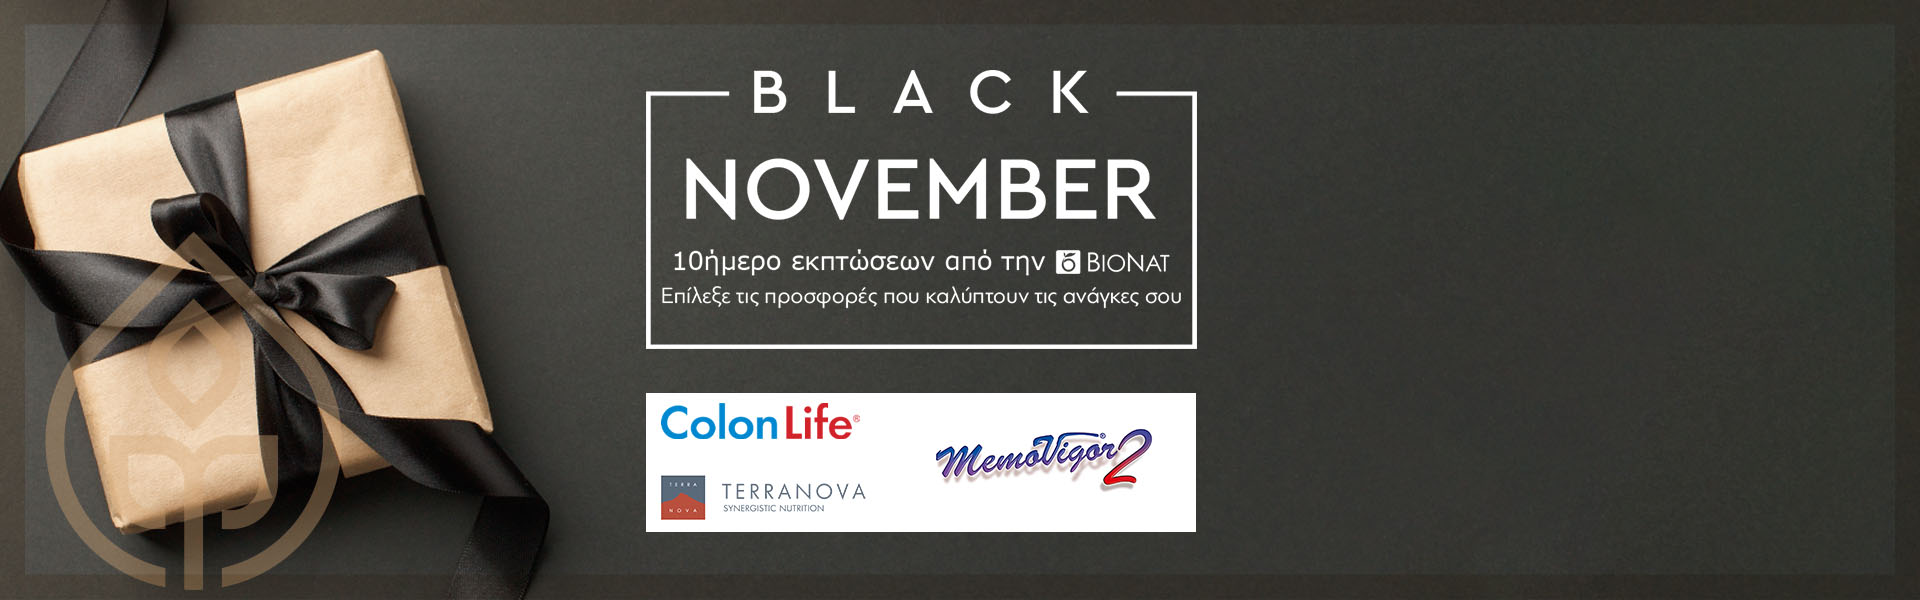 Bionat Black November